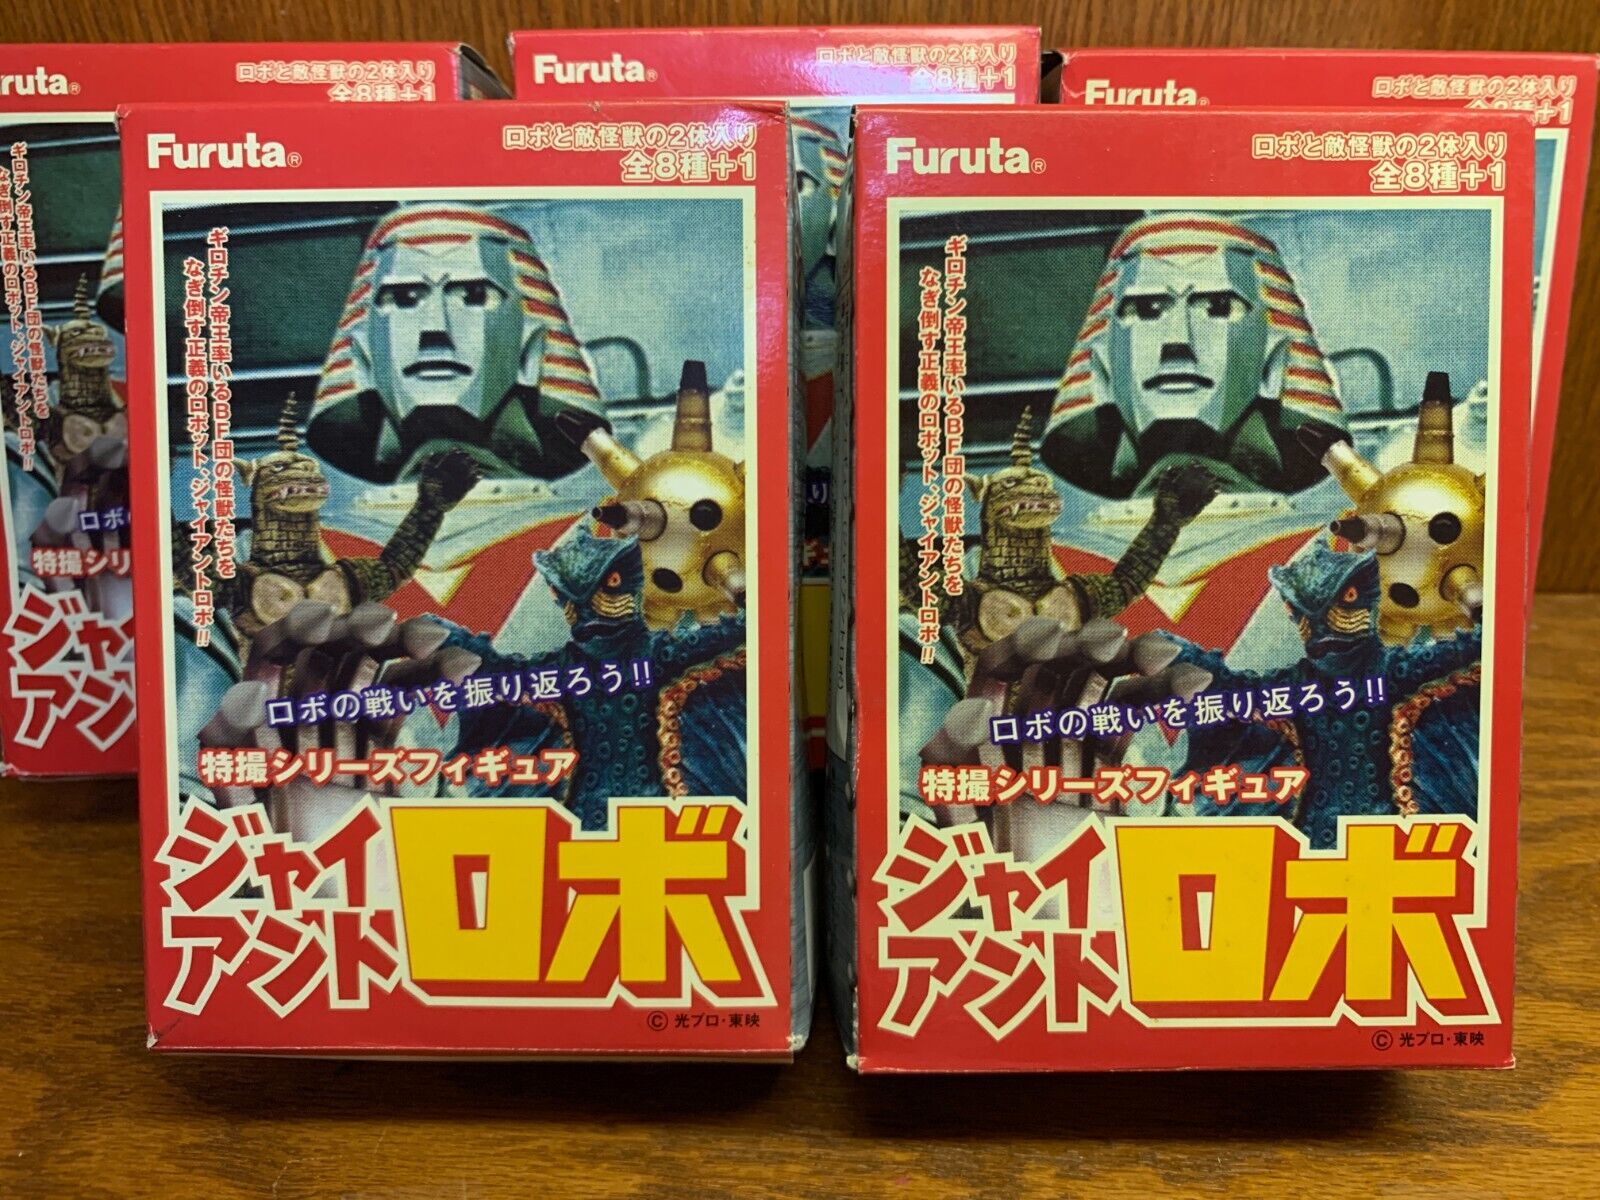 Furuta Mitsuteru Yokoyama 20th Century Giant Robot Figures Lot of 5 boxes